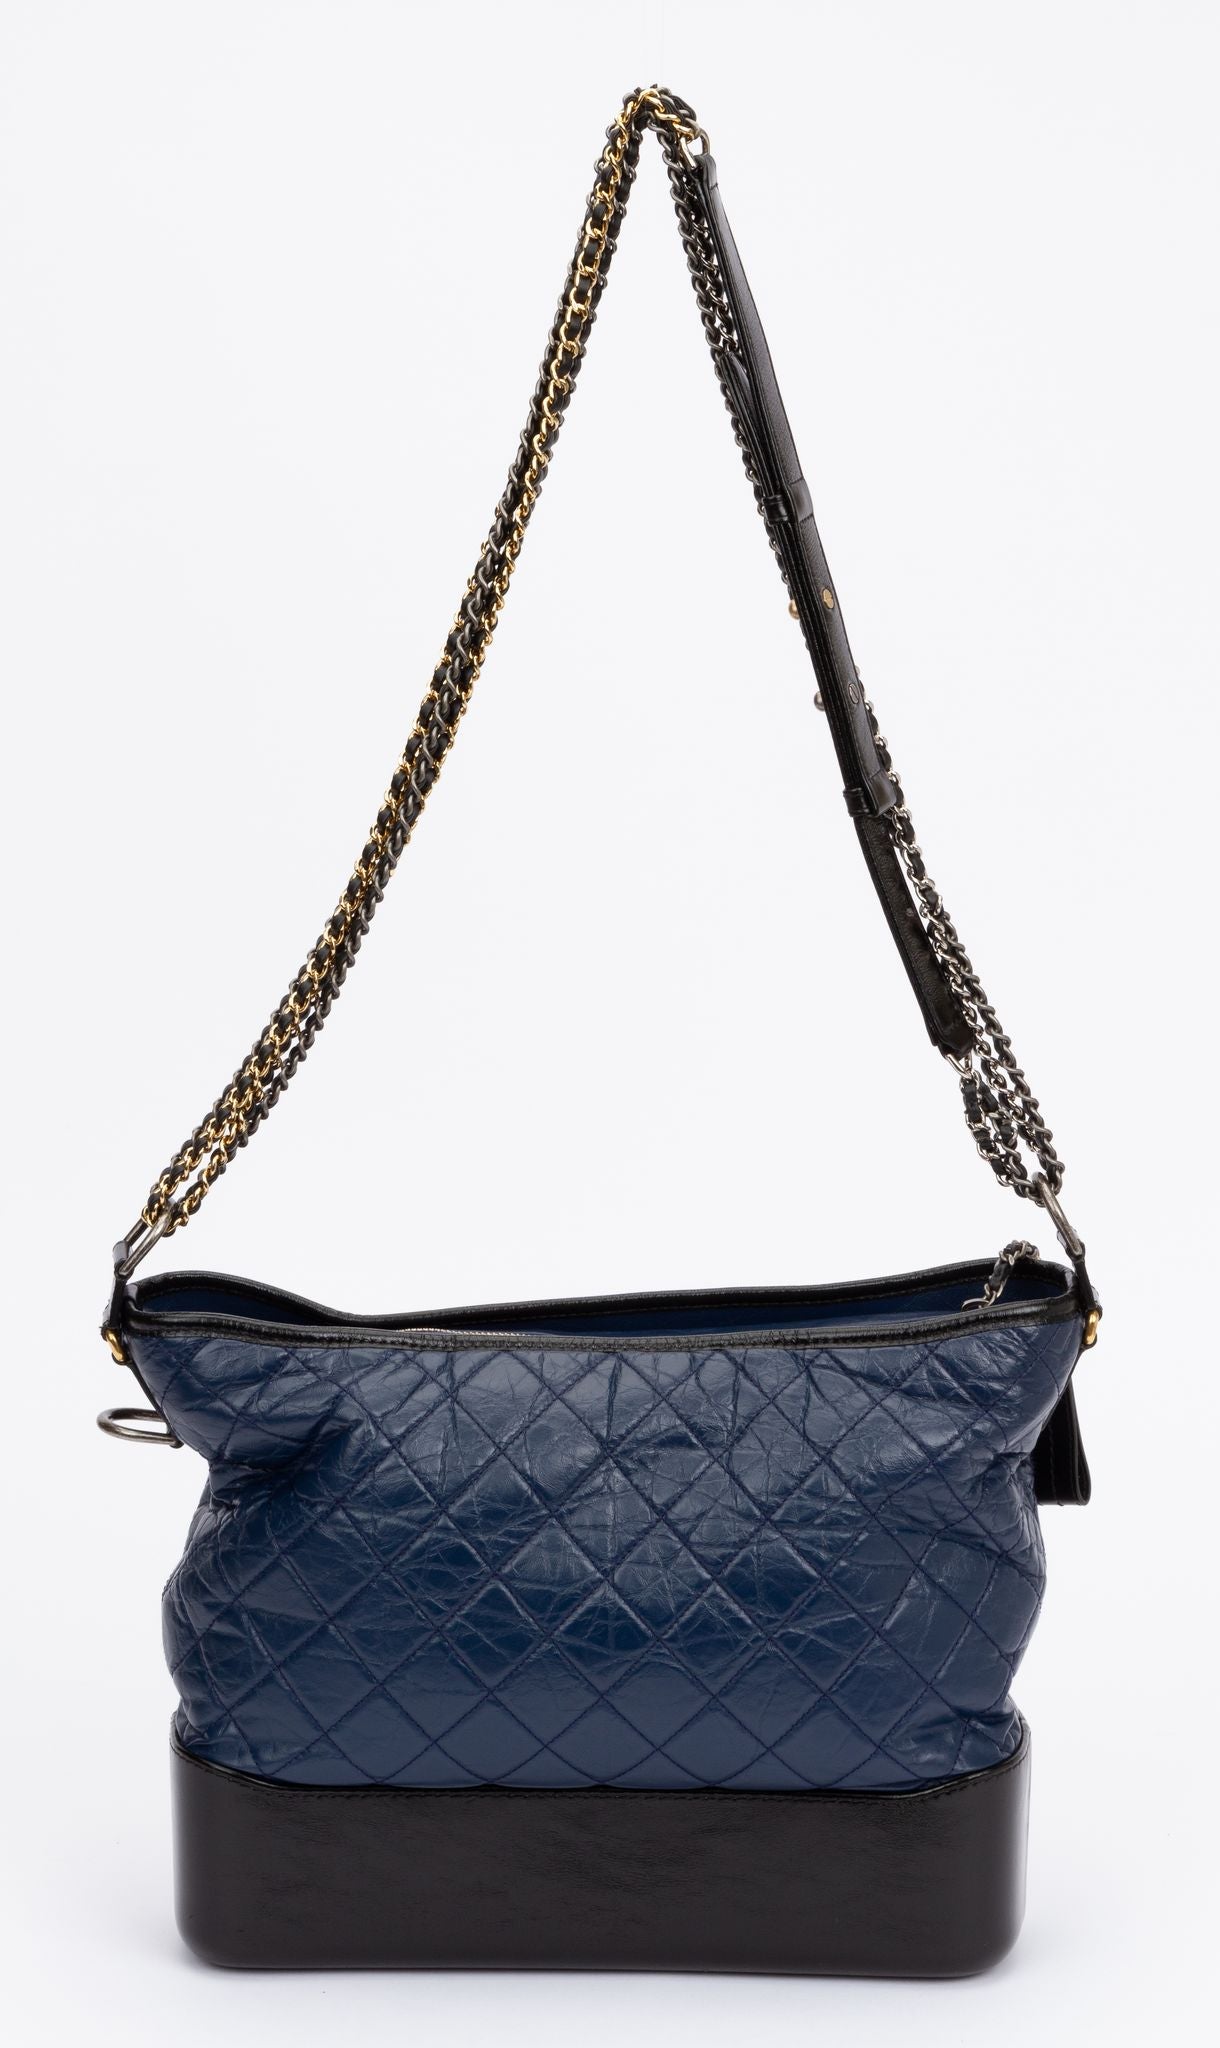 Chanel Small Gabrielle Hobo Bag Iridescent Blue